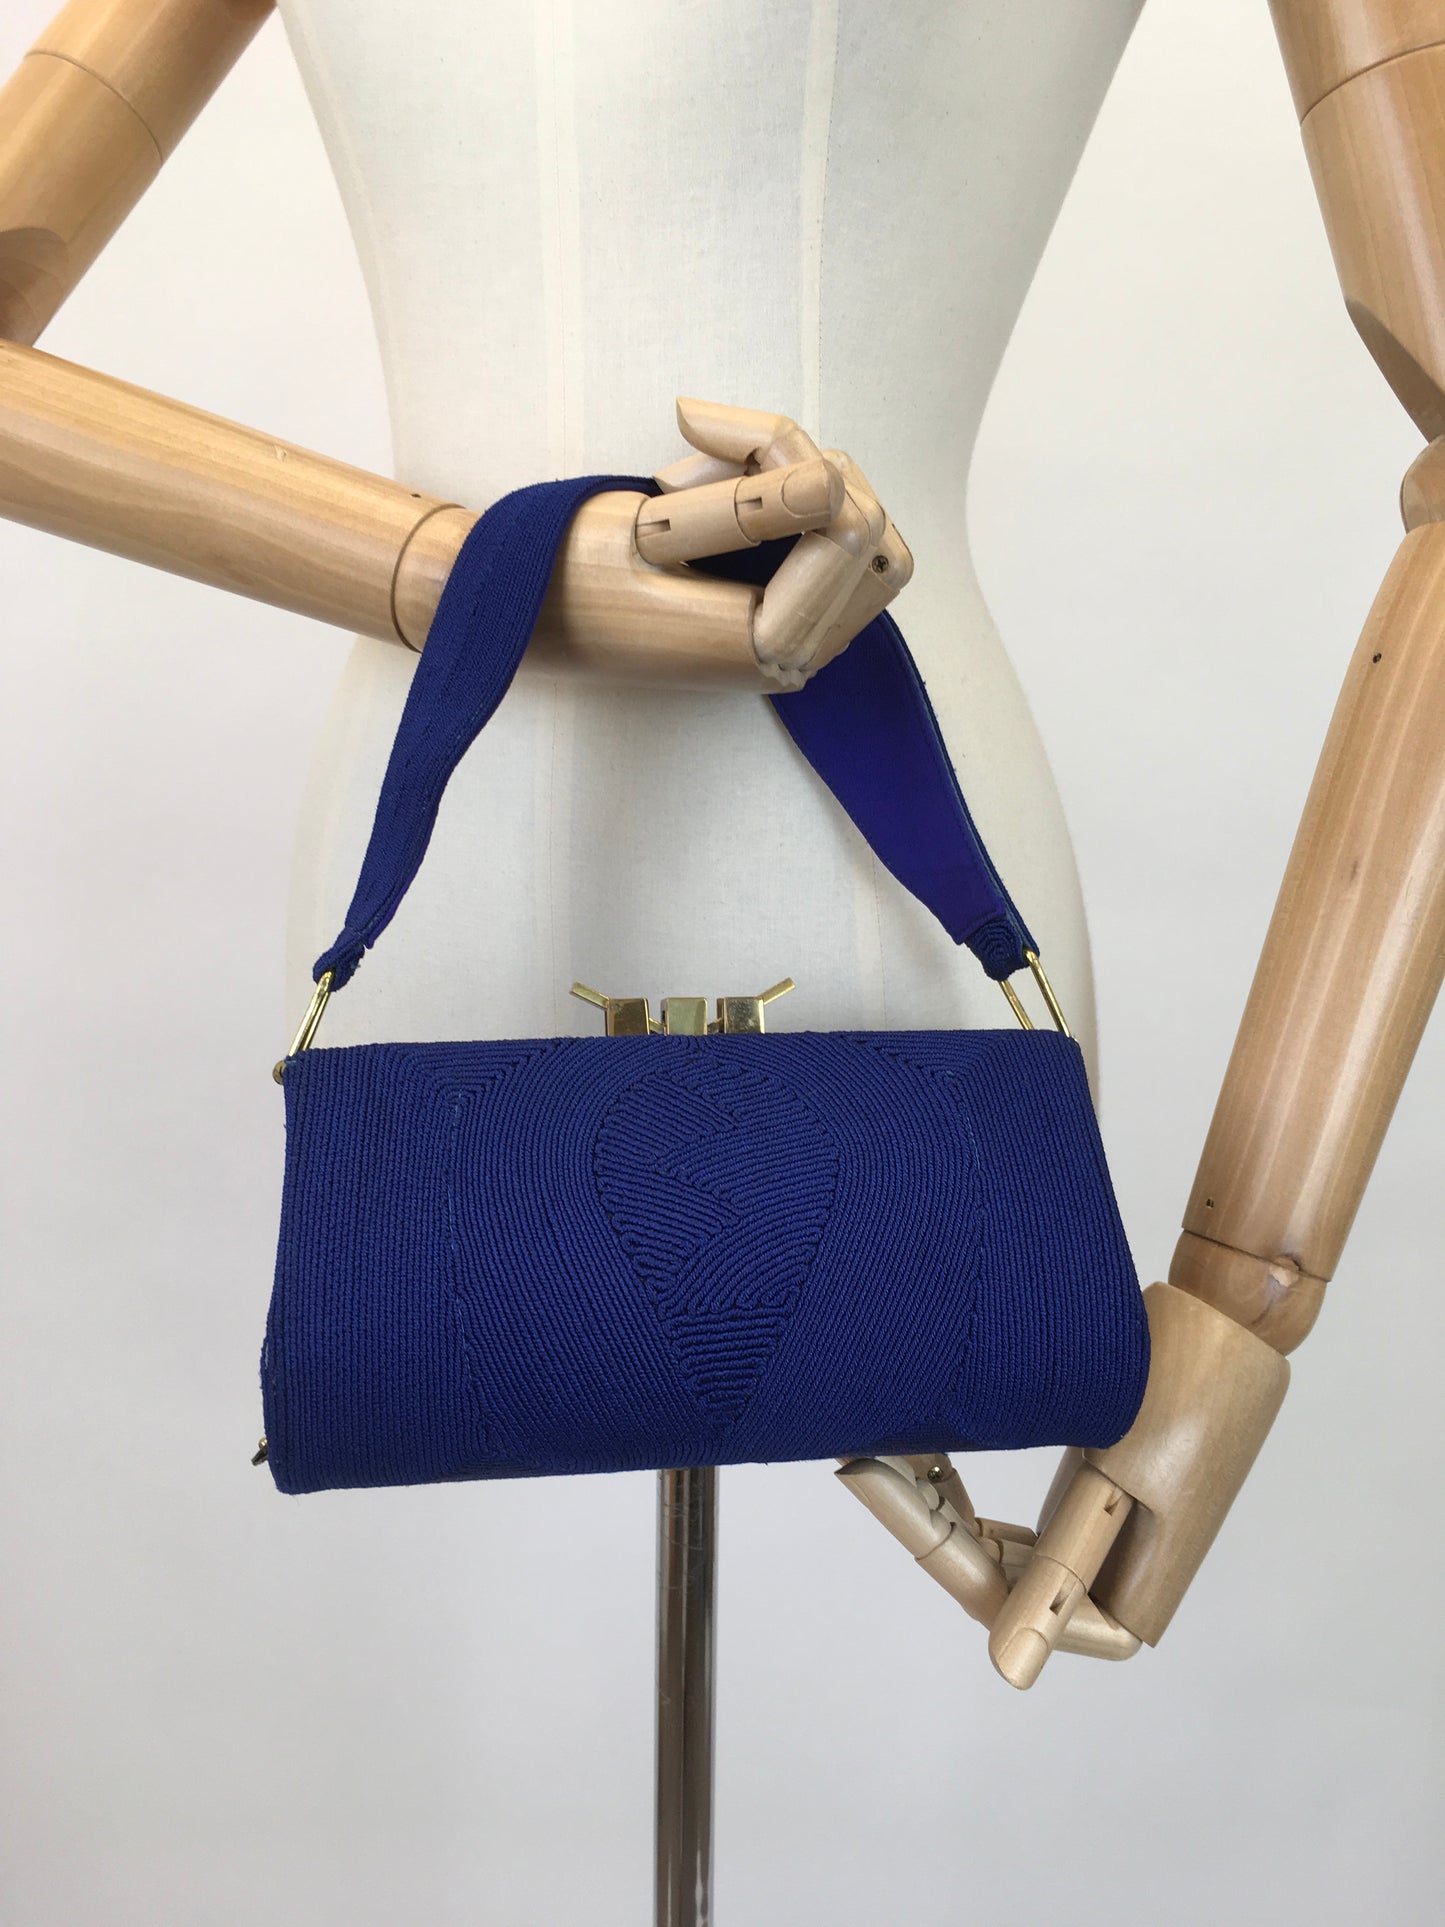 Original 1940's Exquisite Corde Handbag - In A Beautiful Vibrant Rich Blue